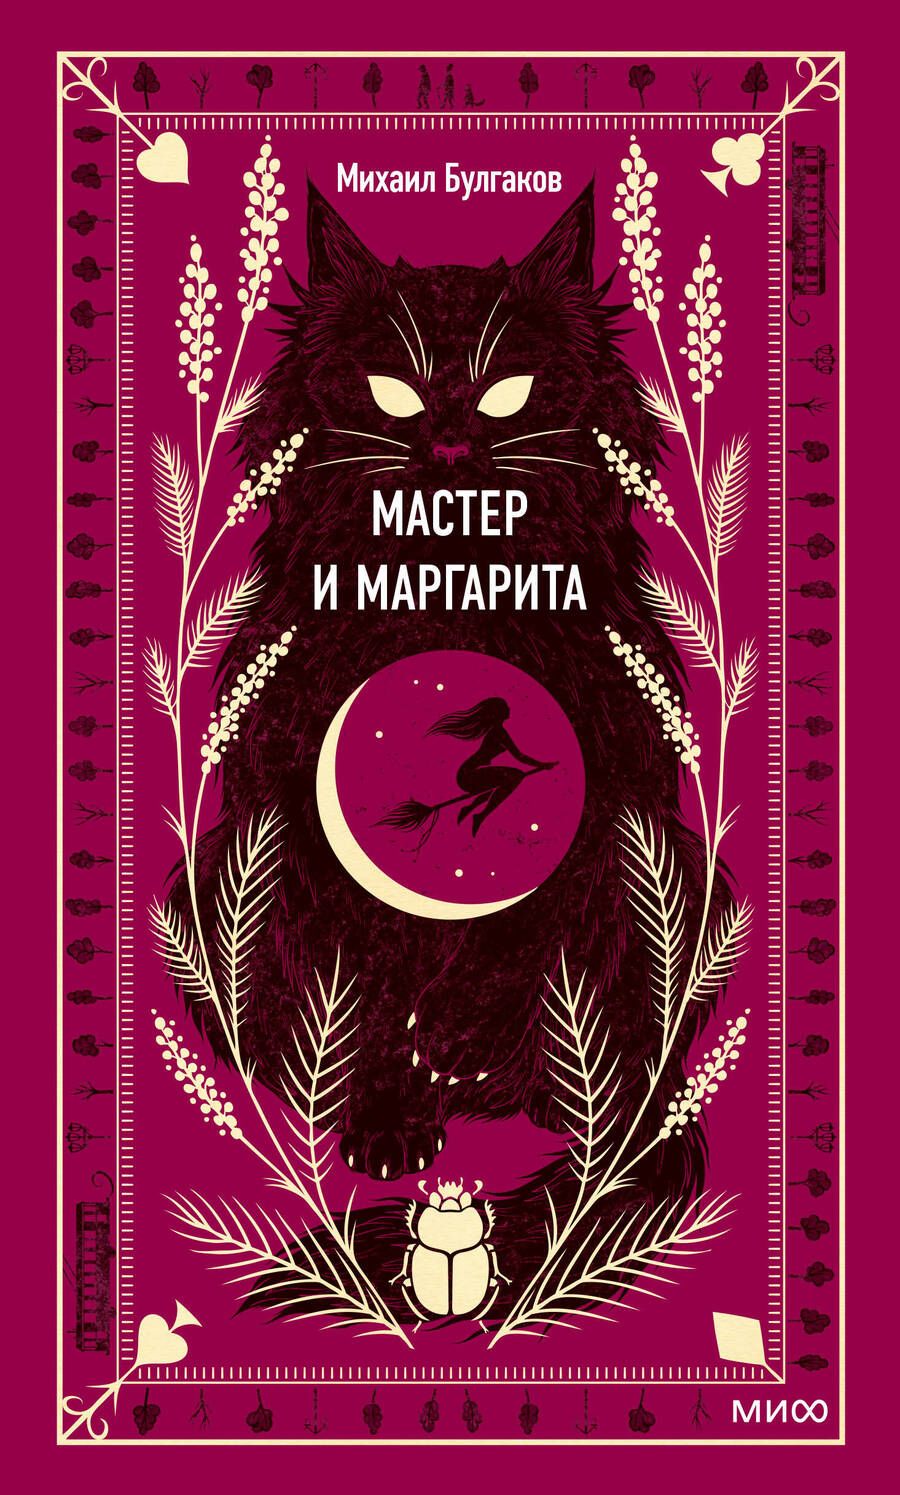 Обложка книги "Булгаков: Мастер и Маргарита"